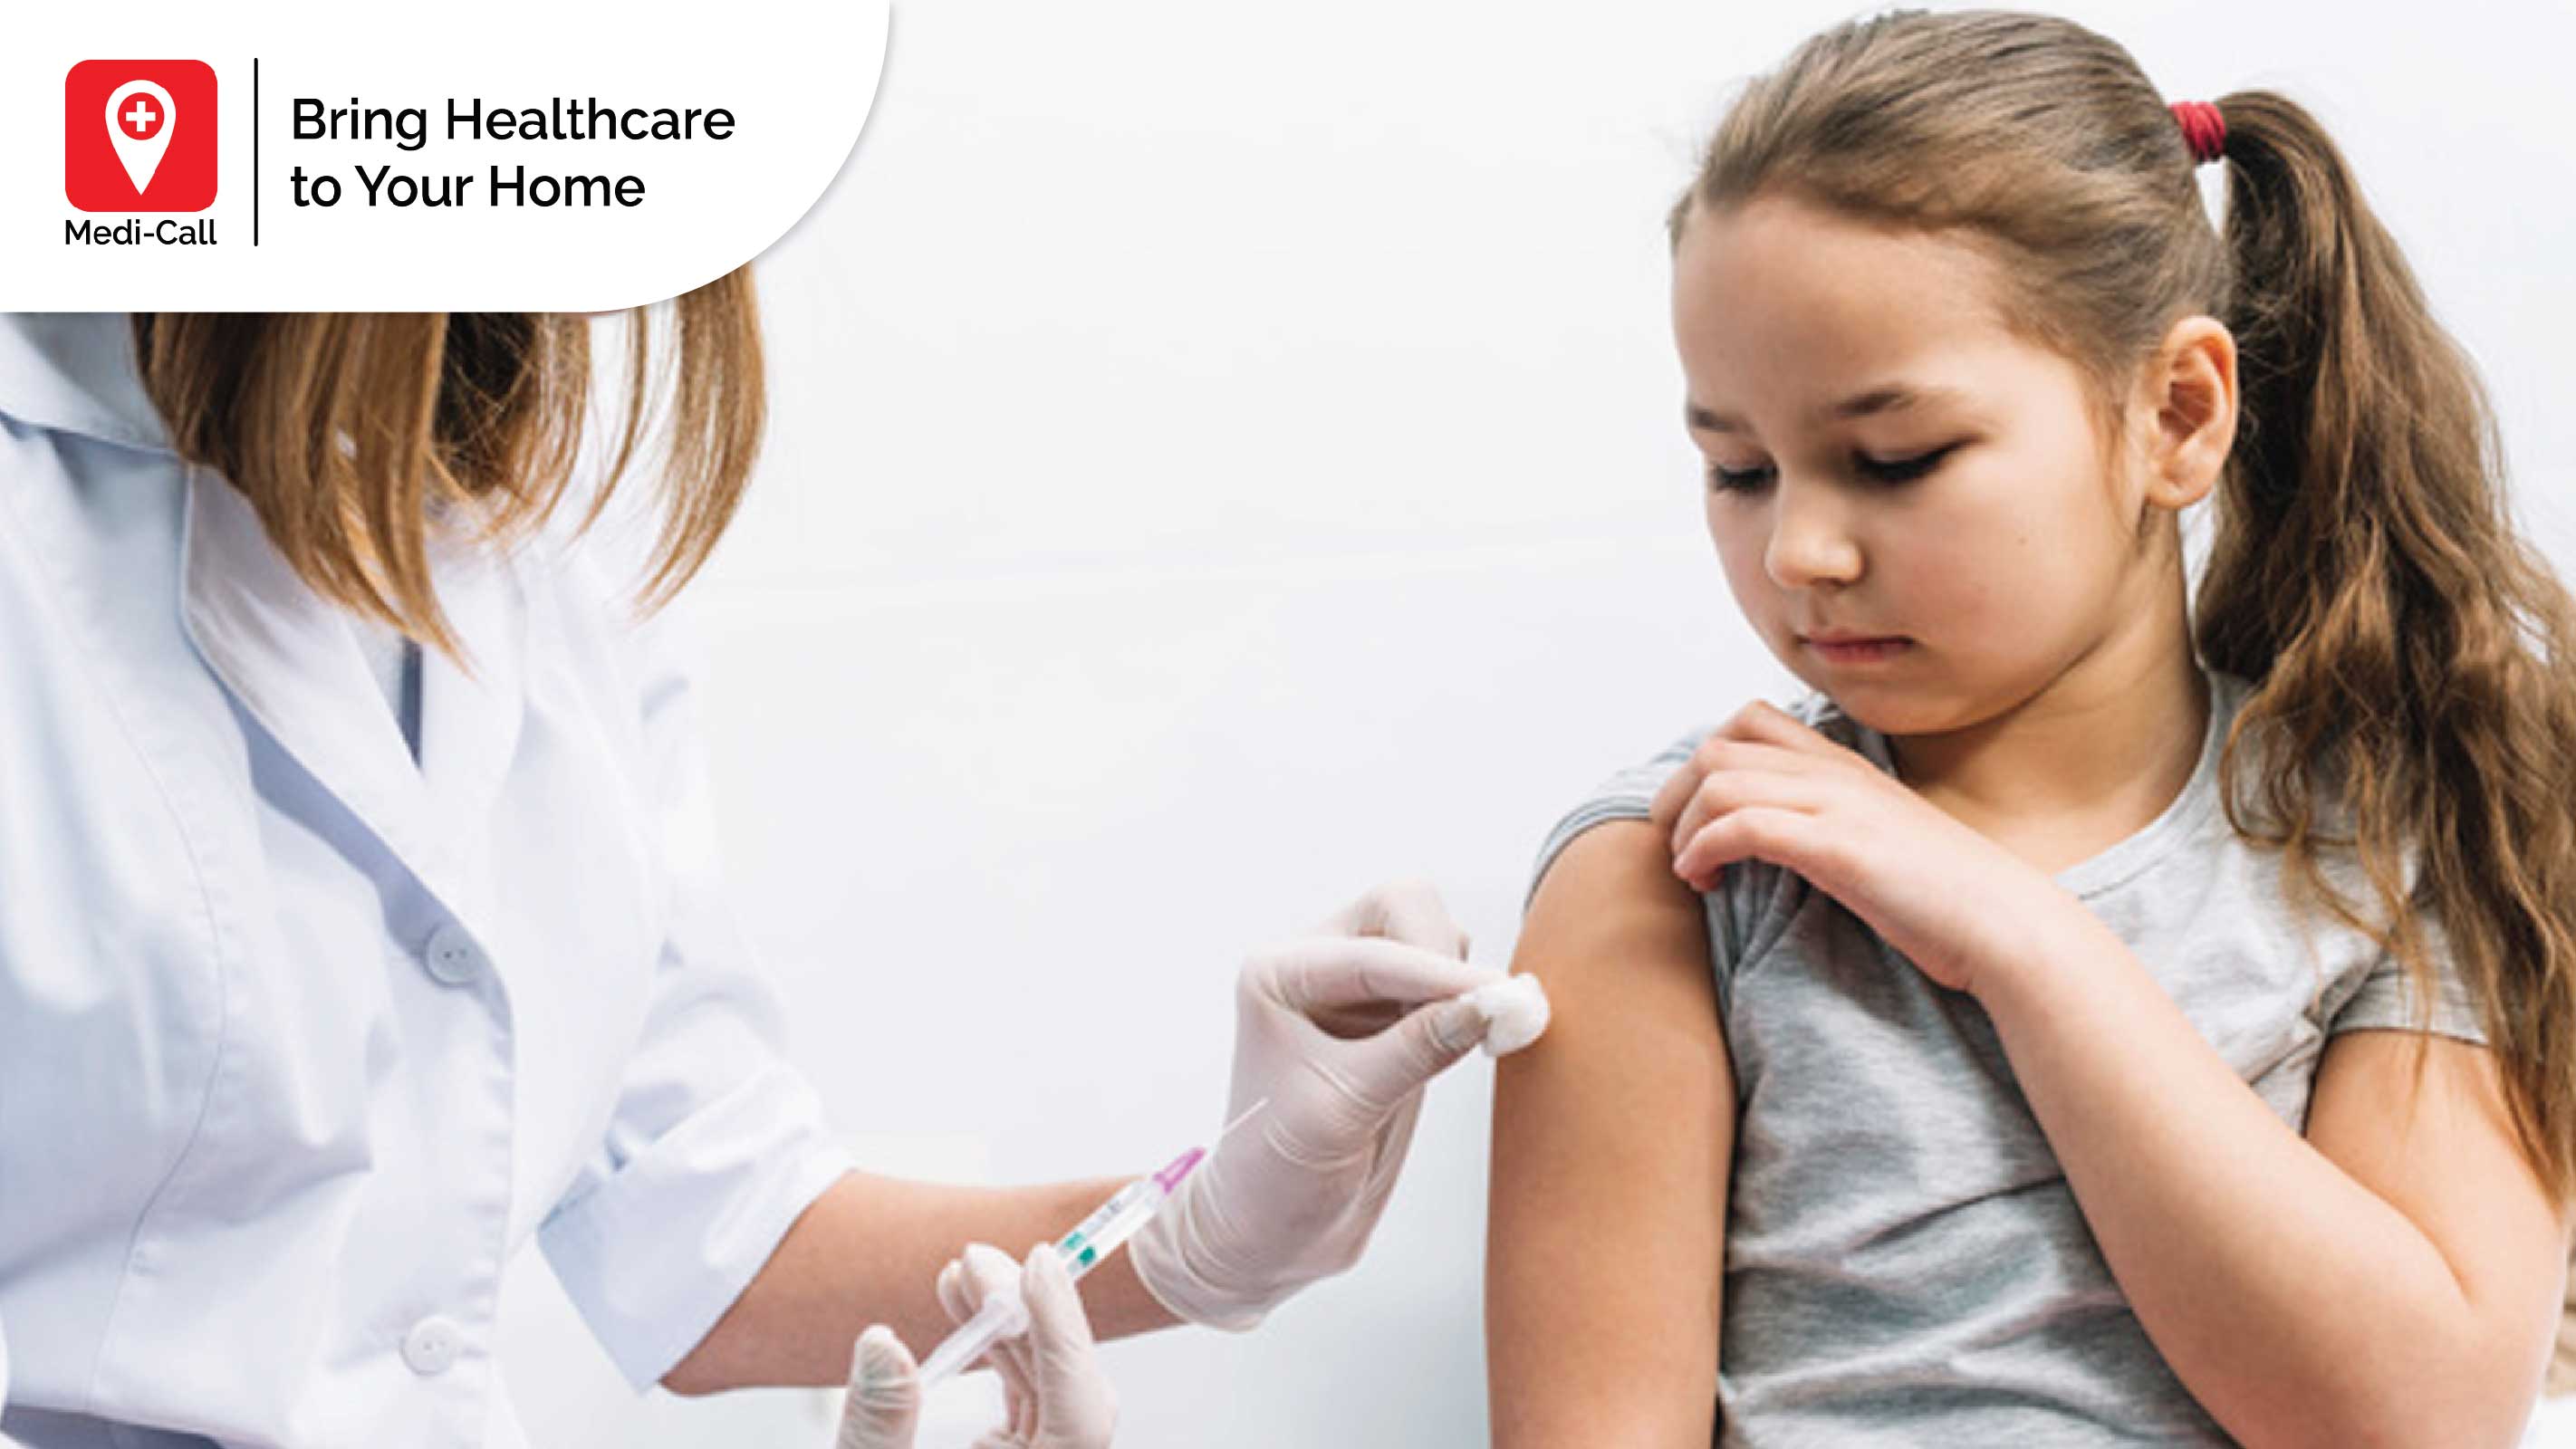 vaksin flu influenza, medi-call, medicall, vaksin flu, flu